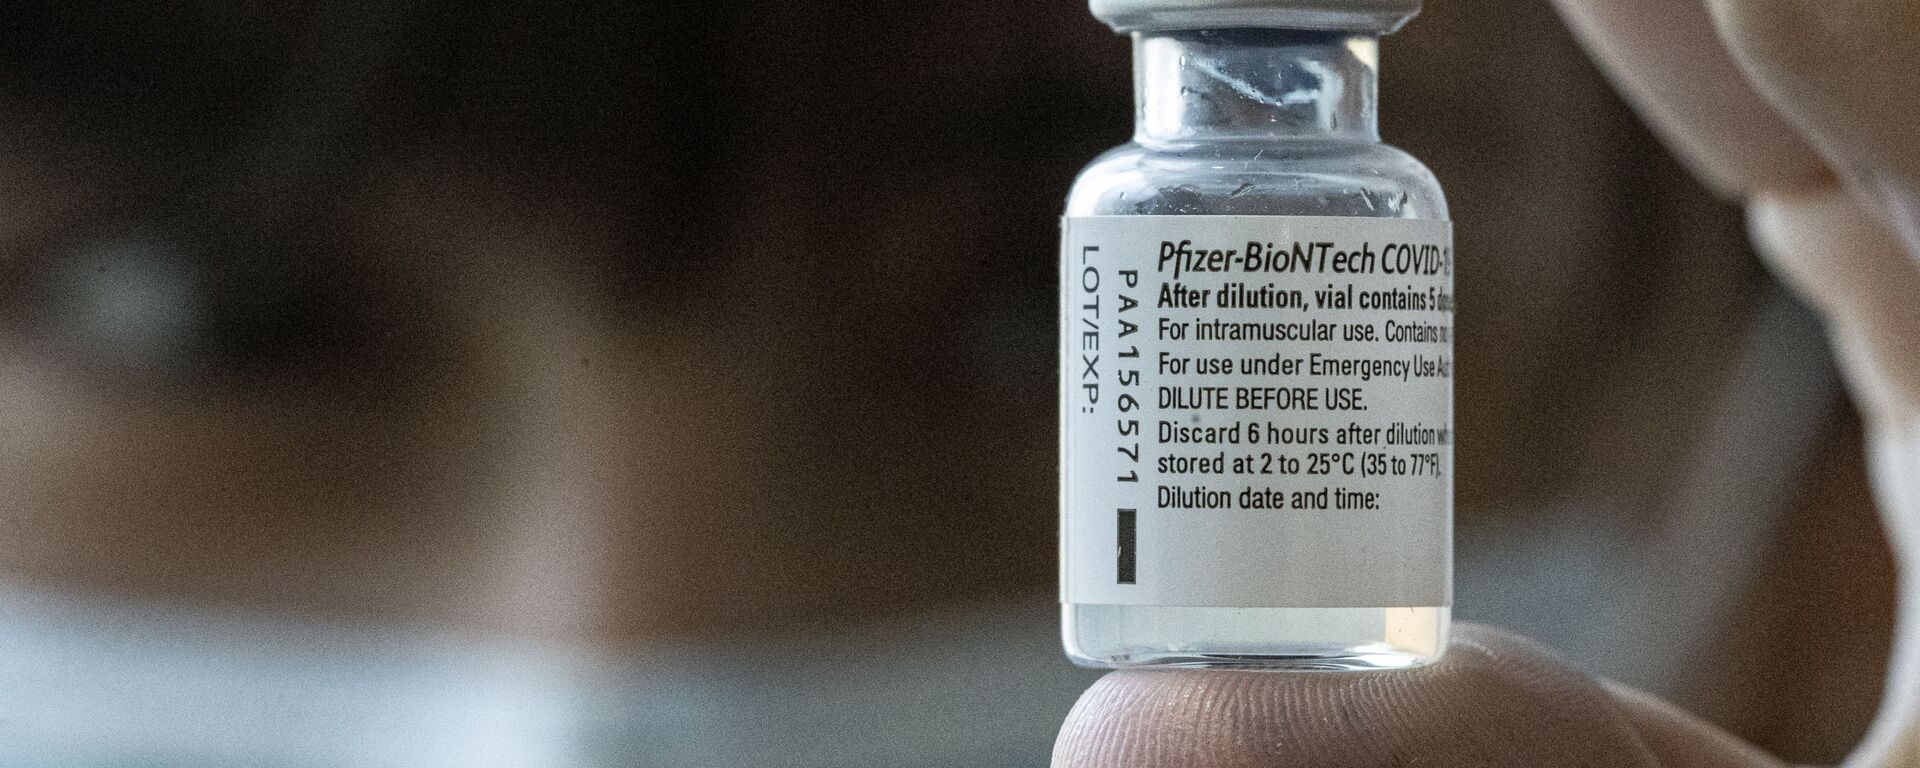 La vacuna Pfizer-BioNTech contra el COVID-19 - Sputnik Mundo, 1920, 16.02.2021